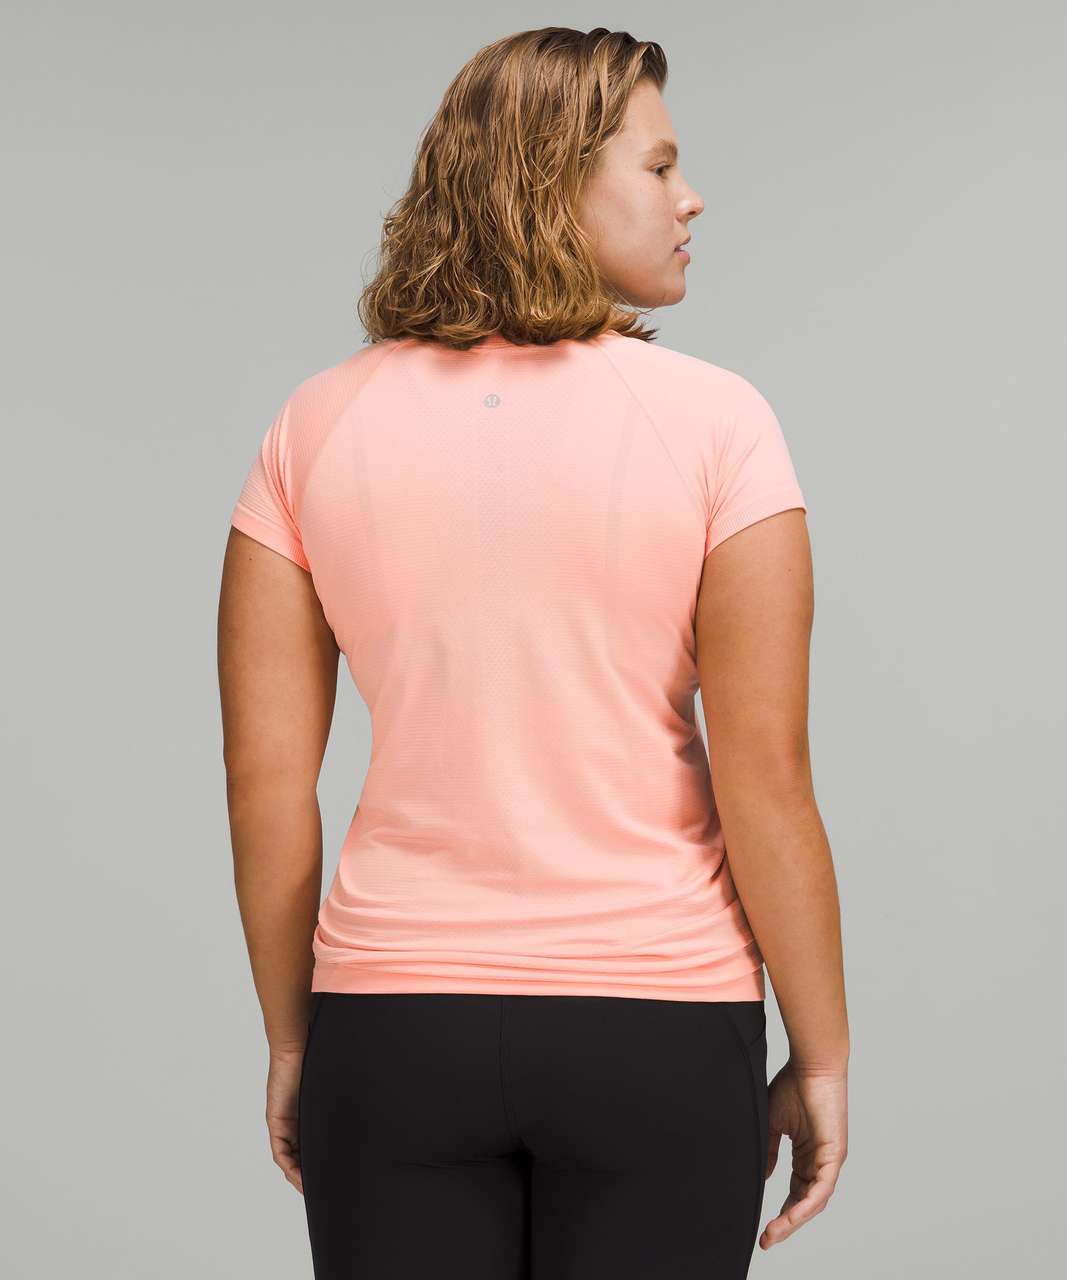 Lululemon Swiftly Tech Short Sleeve Shirt 2.0 - Dew Pink / Dew Pink